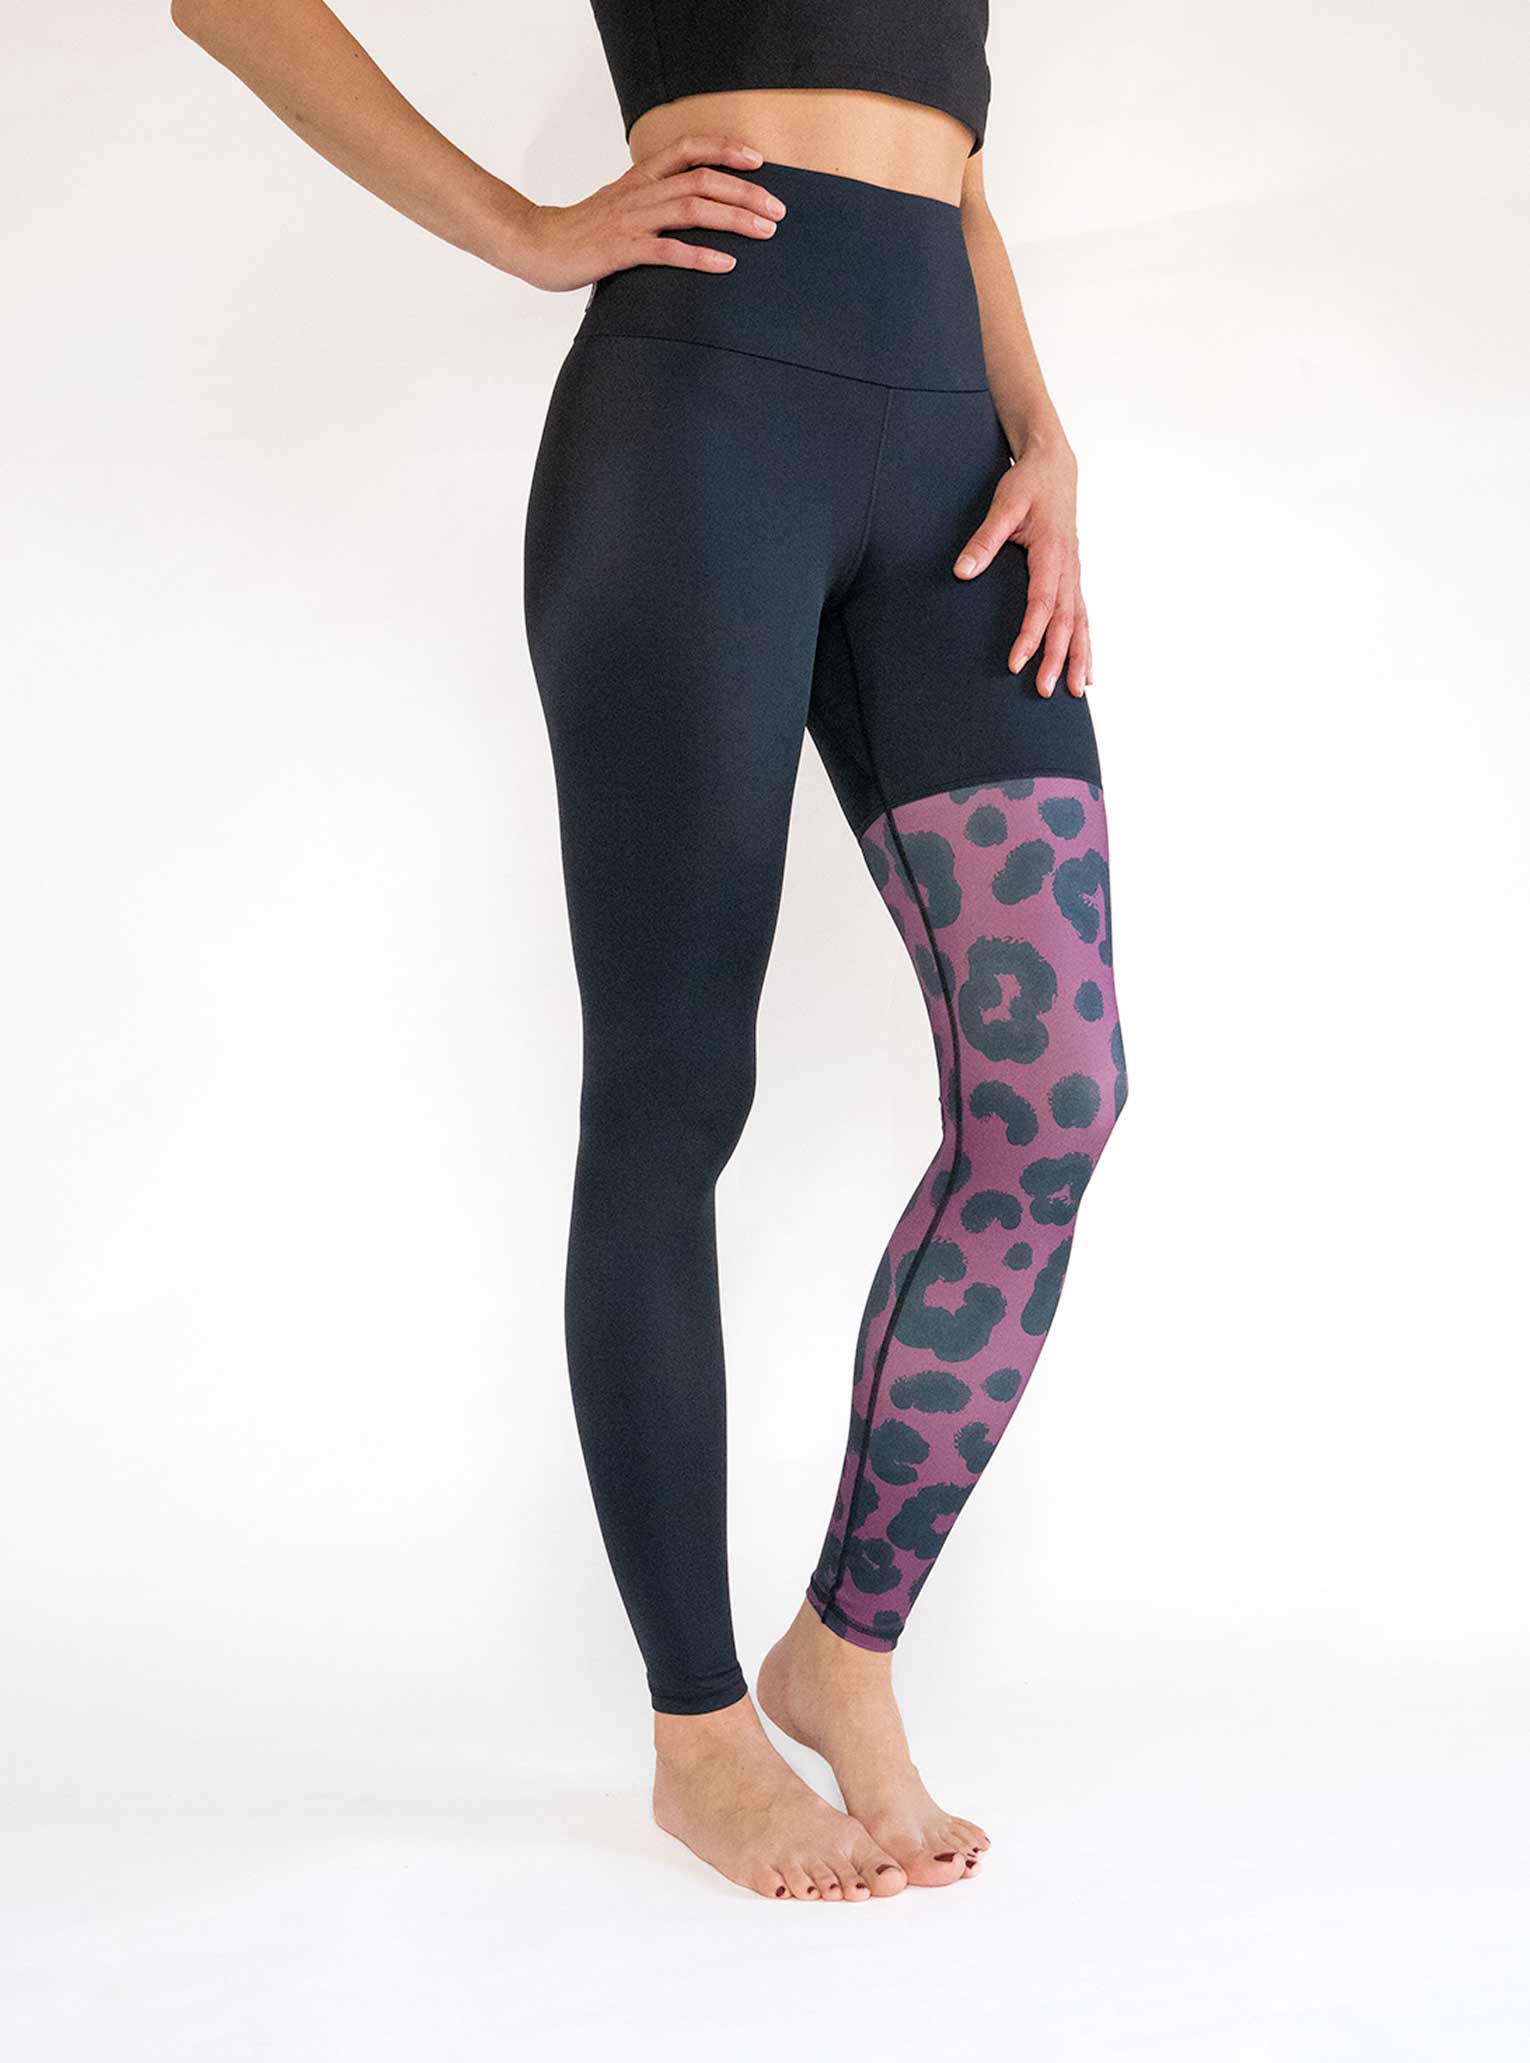 GEORGE Activewear Gym Yoga Leggings Medium Leopard Print Tickled Pink NEW  BLACK